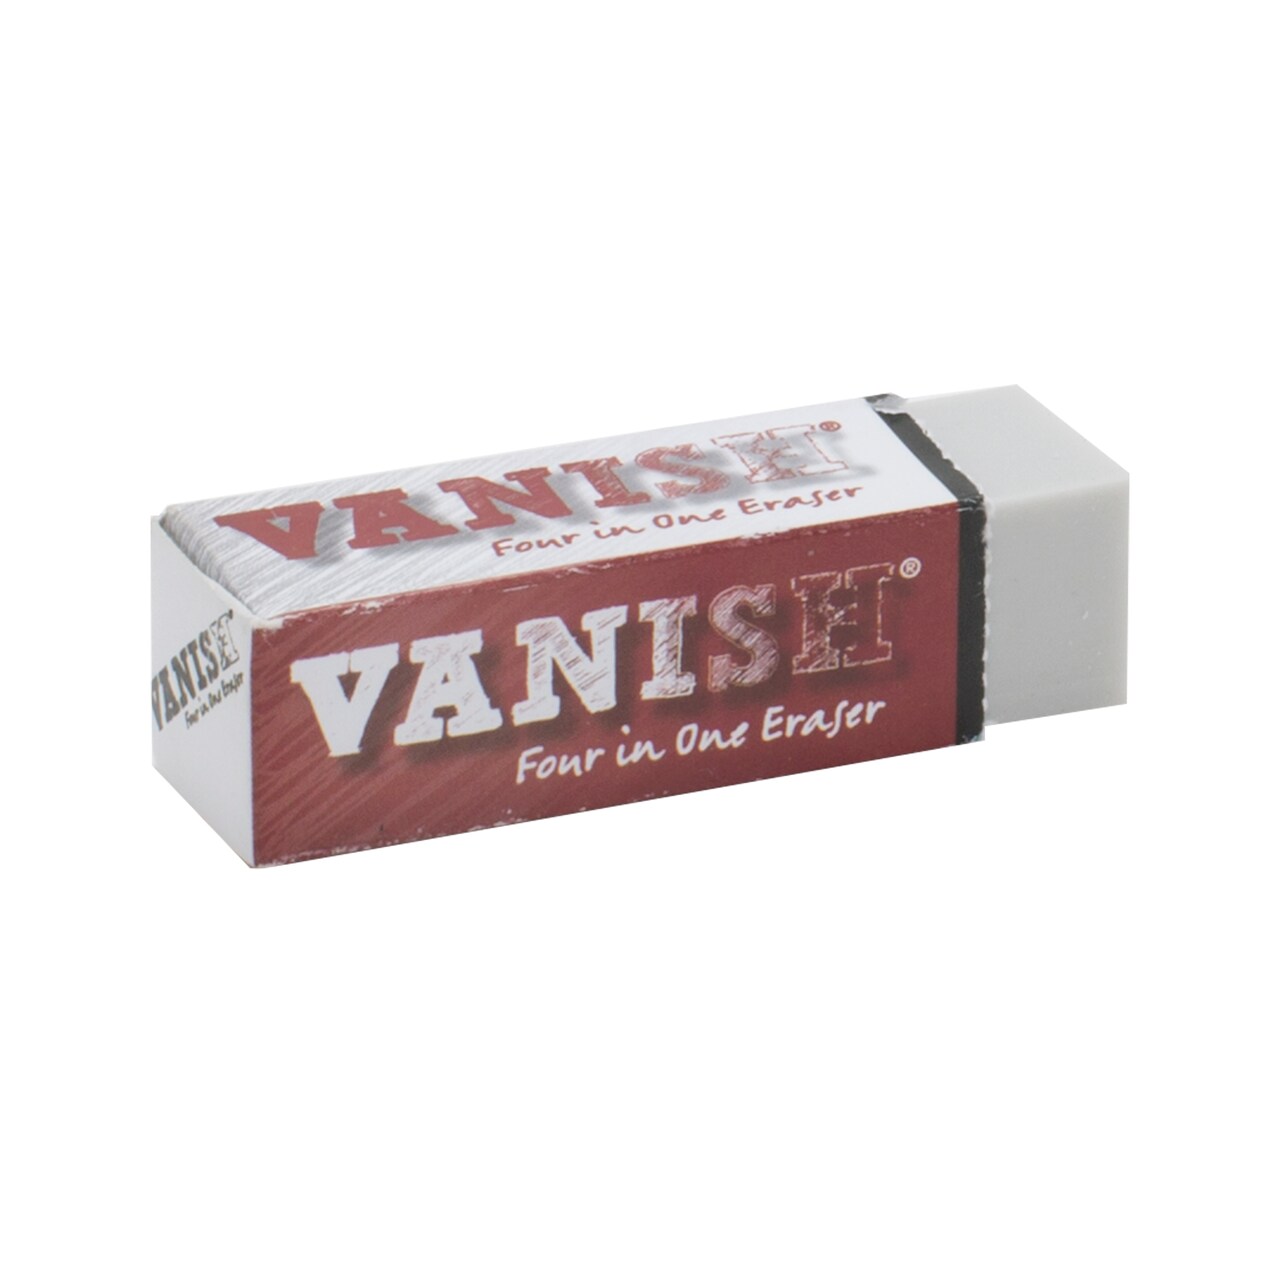 Vanish 4-in-1 Artist Eraser Replaces Gum Rubber Vinyl and Kneaded Erasers